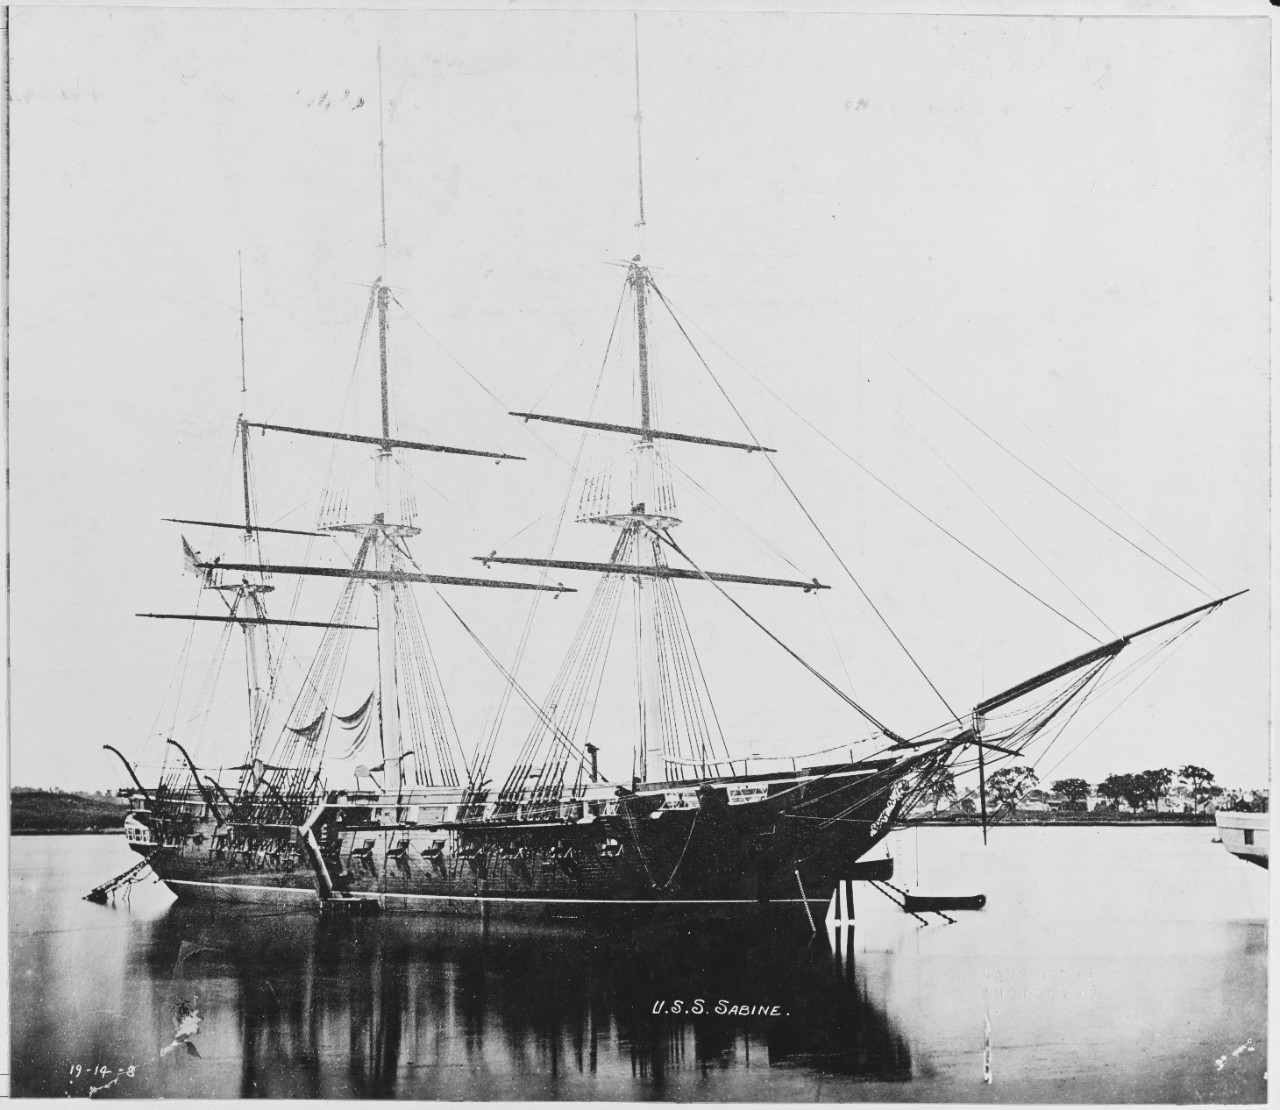 U.S.S. SABINE (1855-1883)